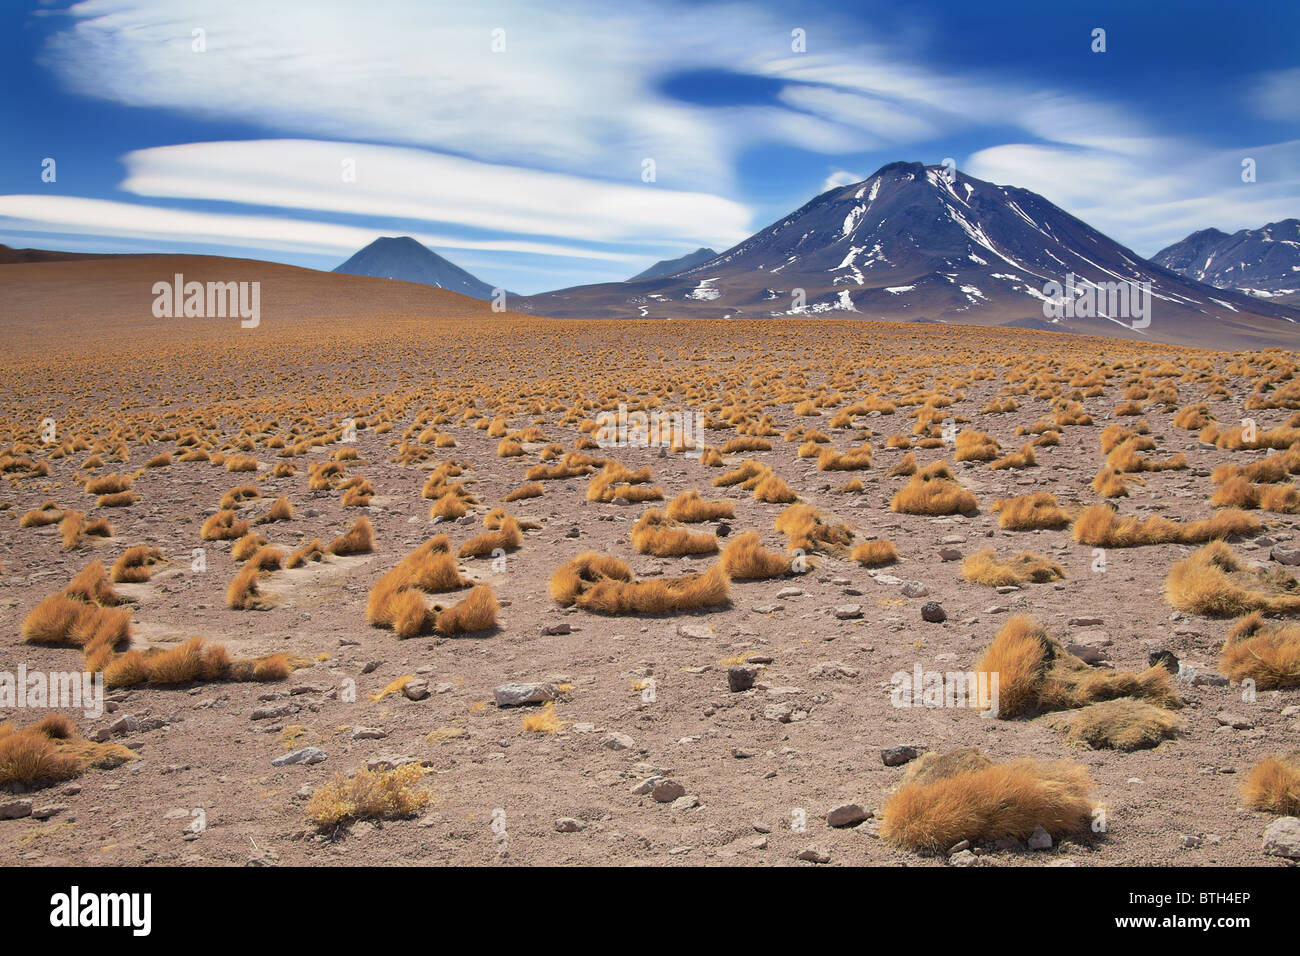 altiplano grass paja brava close to volcano Miscanti, desert Atacama, Chile Stock Photo